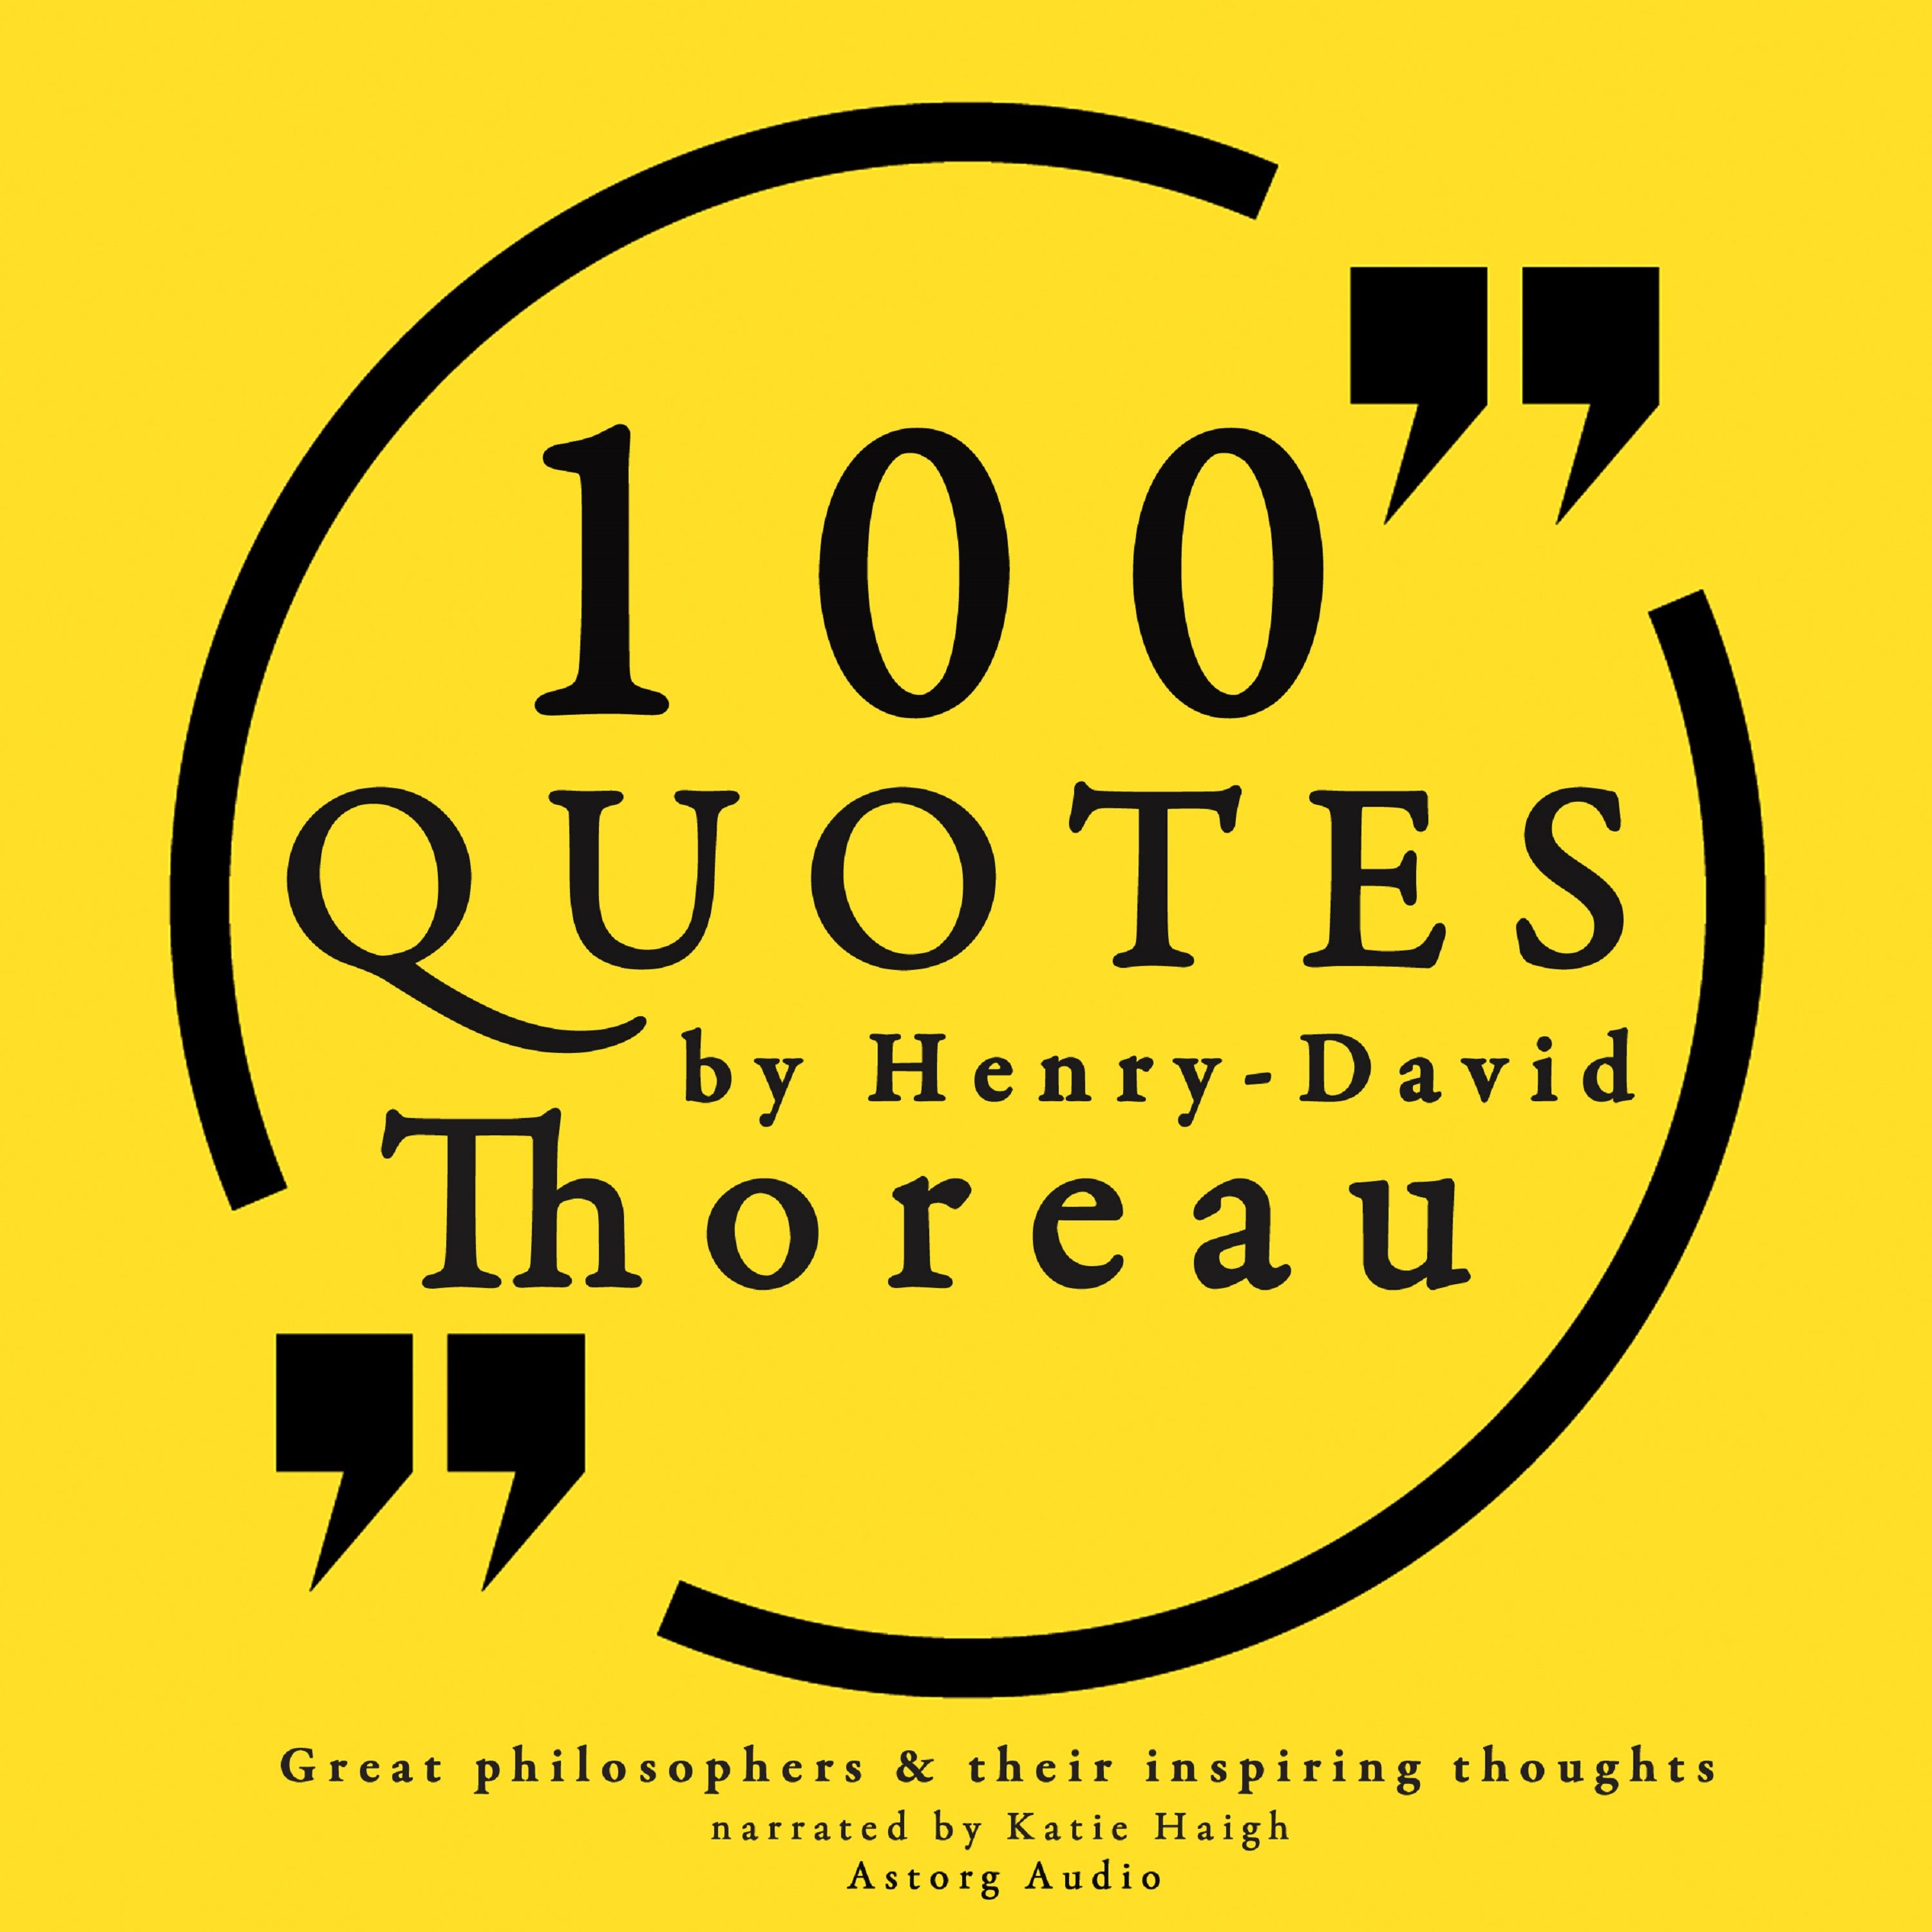 100 Quotes by Henry David Thoreau: Great Philosophers & Their Inspiring Thoughts, ljudbok av Henry David Thoreau